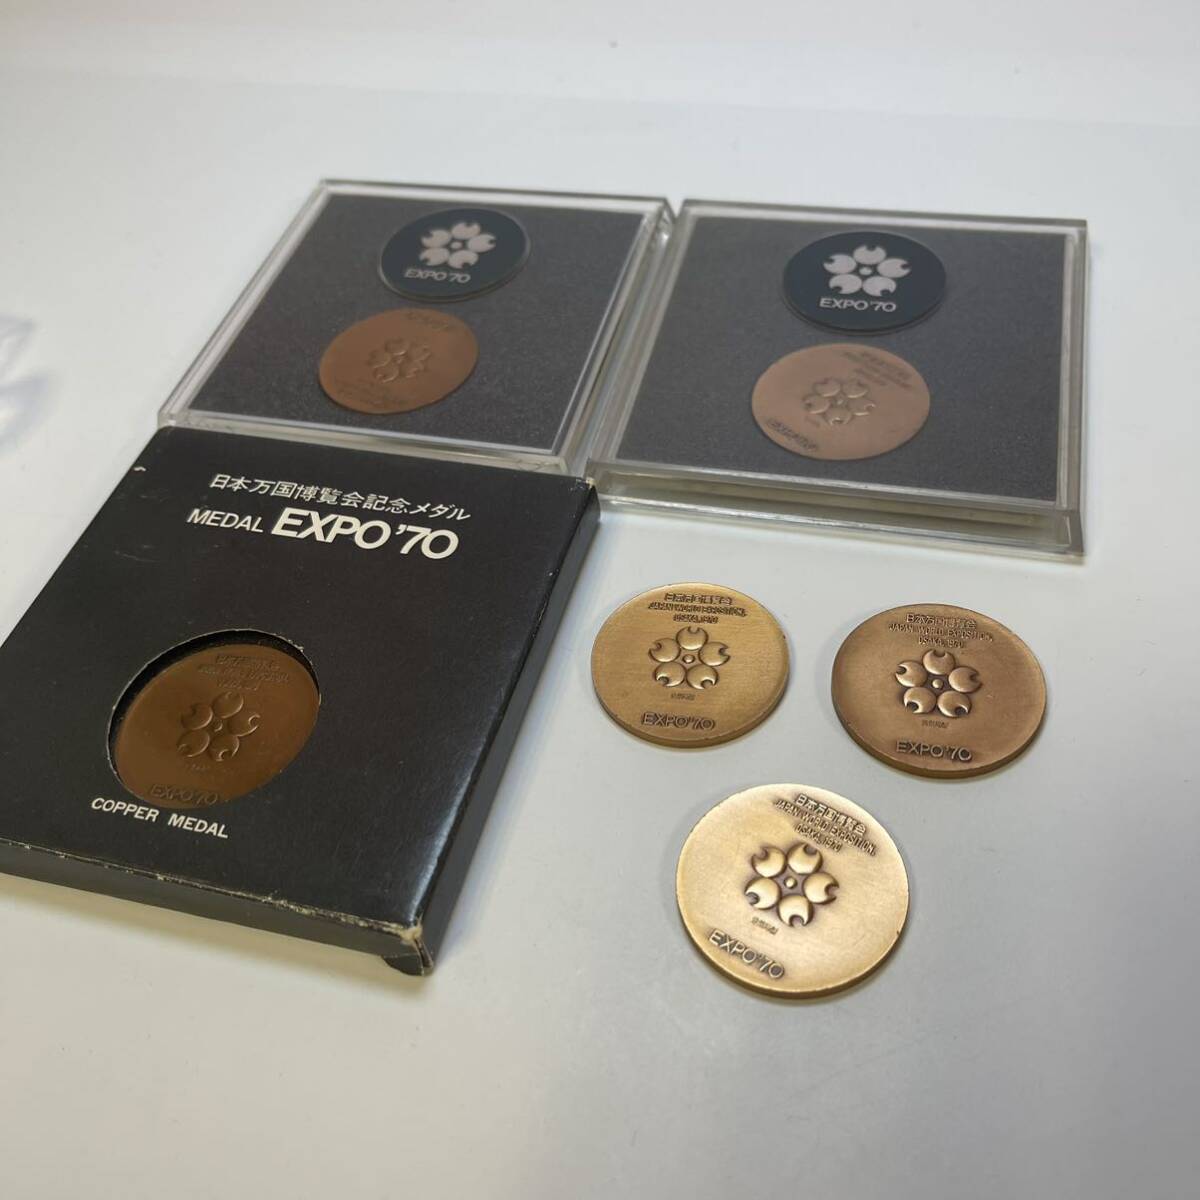 EXPO'70 日本万国博覧会 記念メダル 6枚おまとめ_画像1